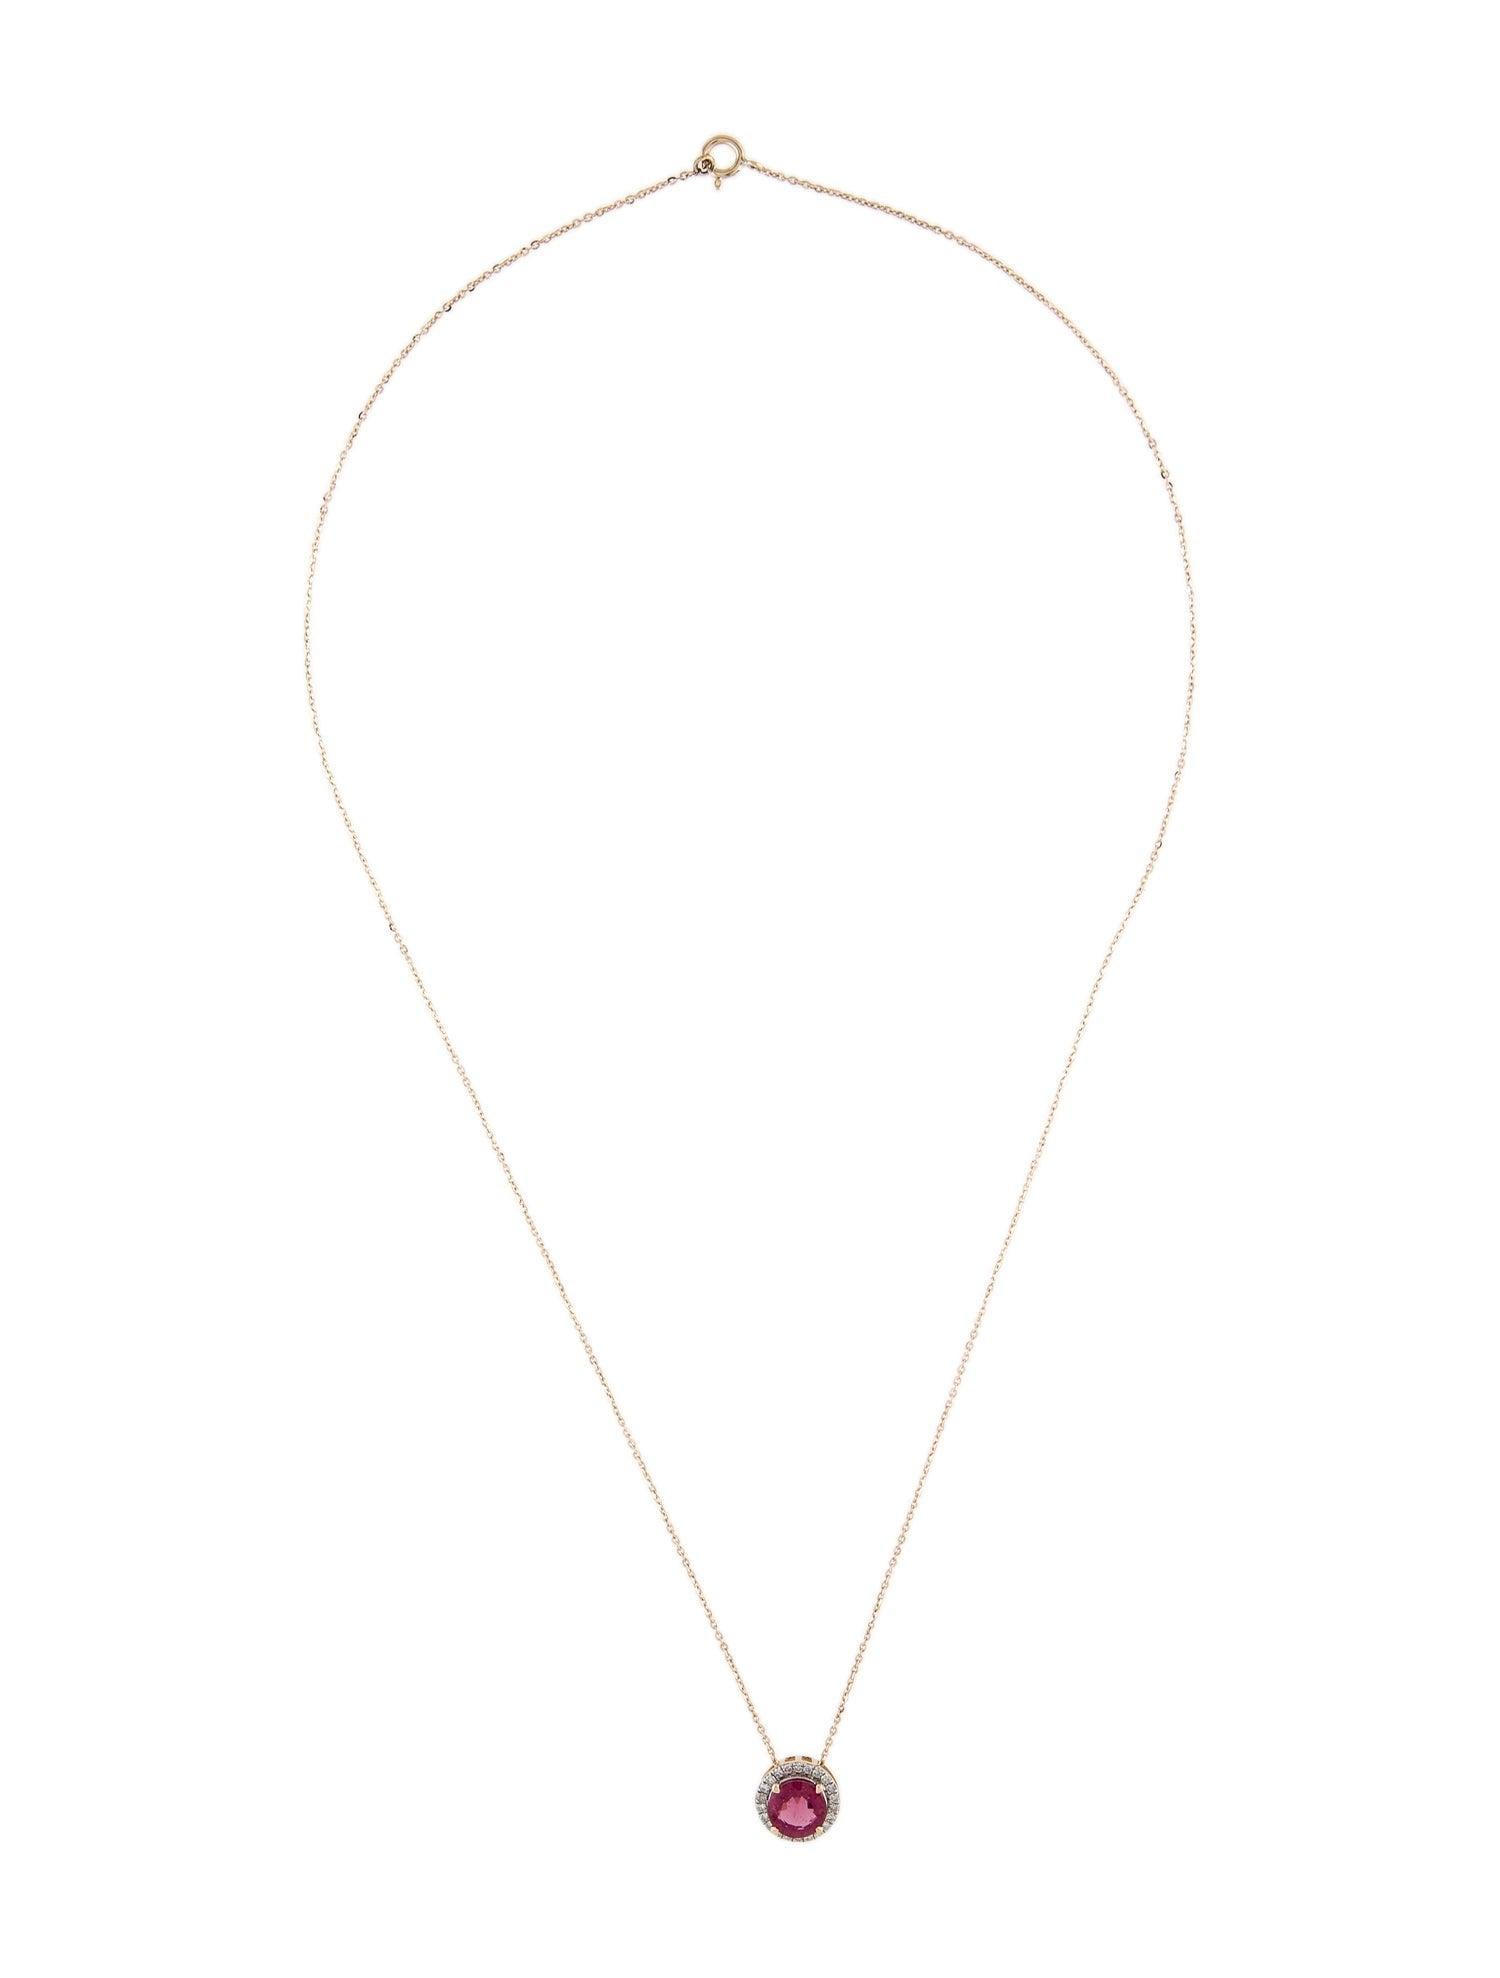 Rose Cut 14K 1.09ct Tourmaline & Diamond Pendant Necklace: Luxury Statement Jewelry Piece For Sale